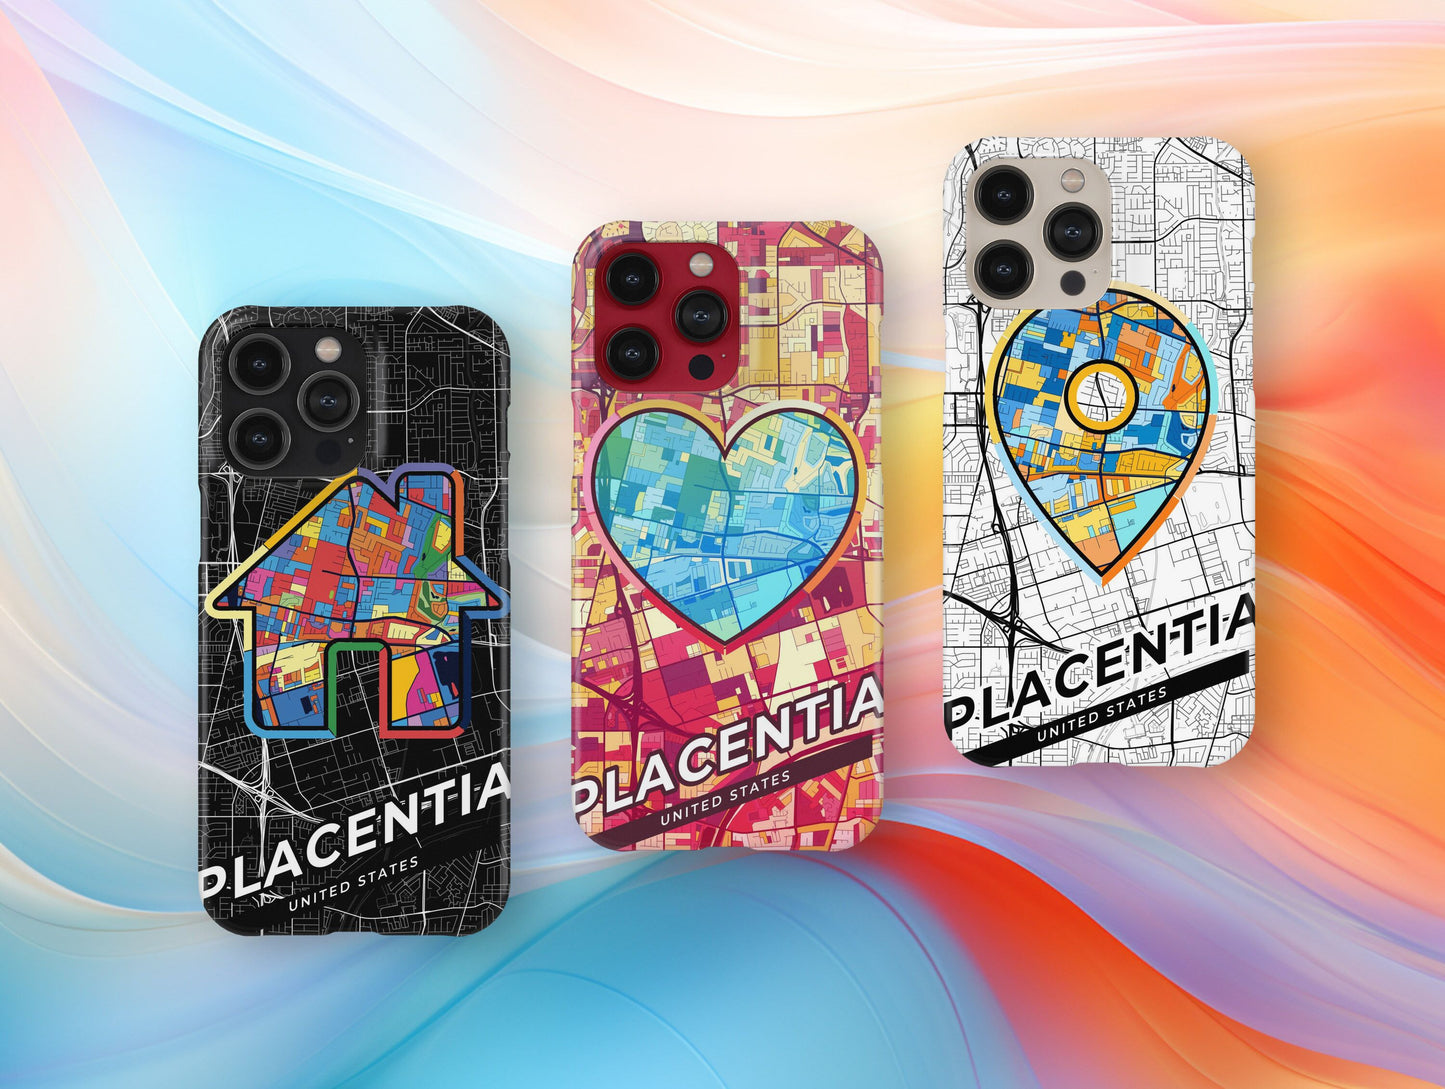 Placentia California slim phone case with colorful icon